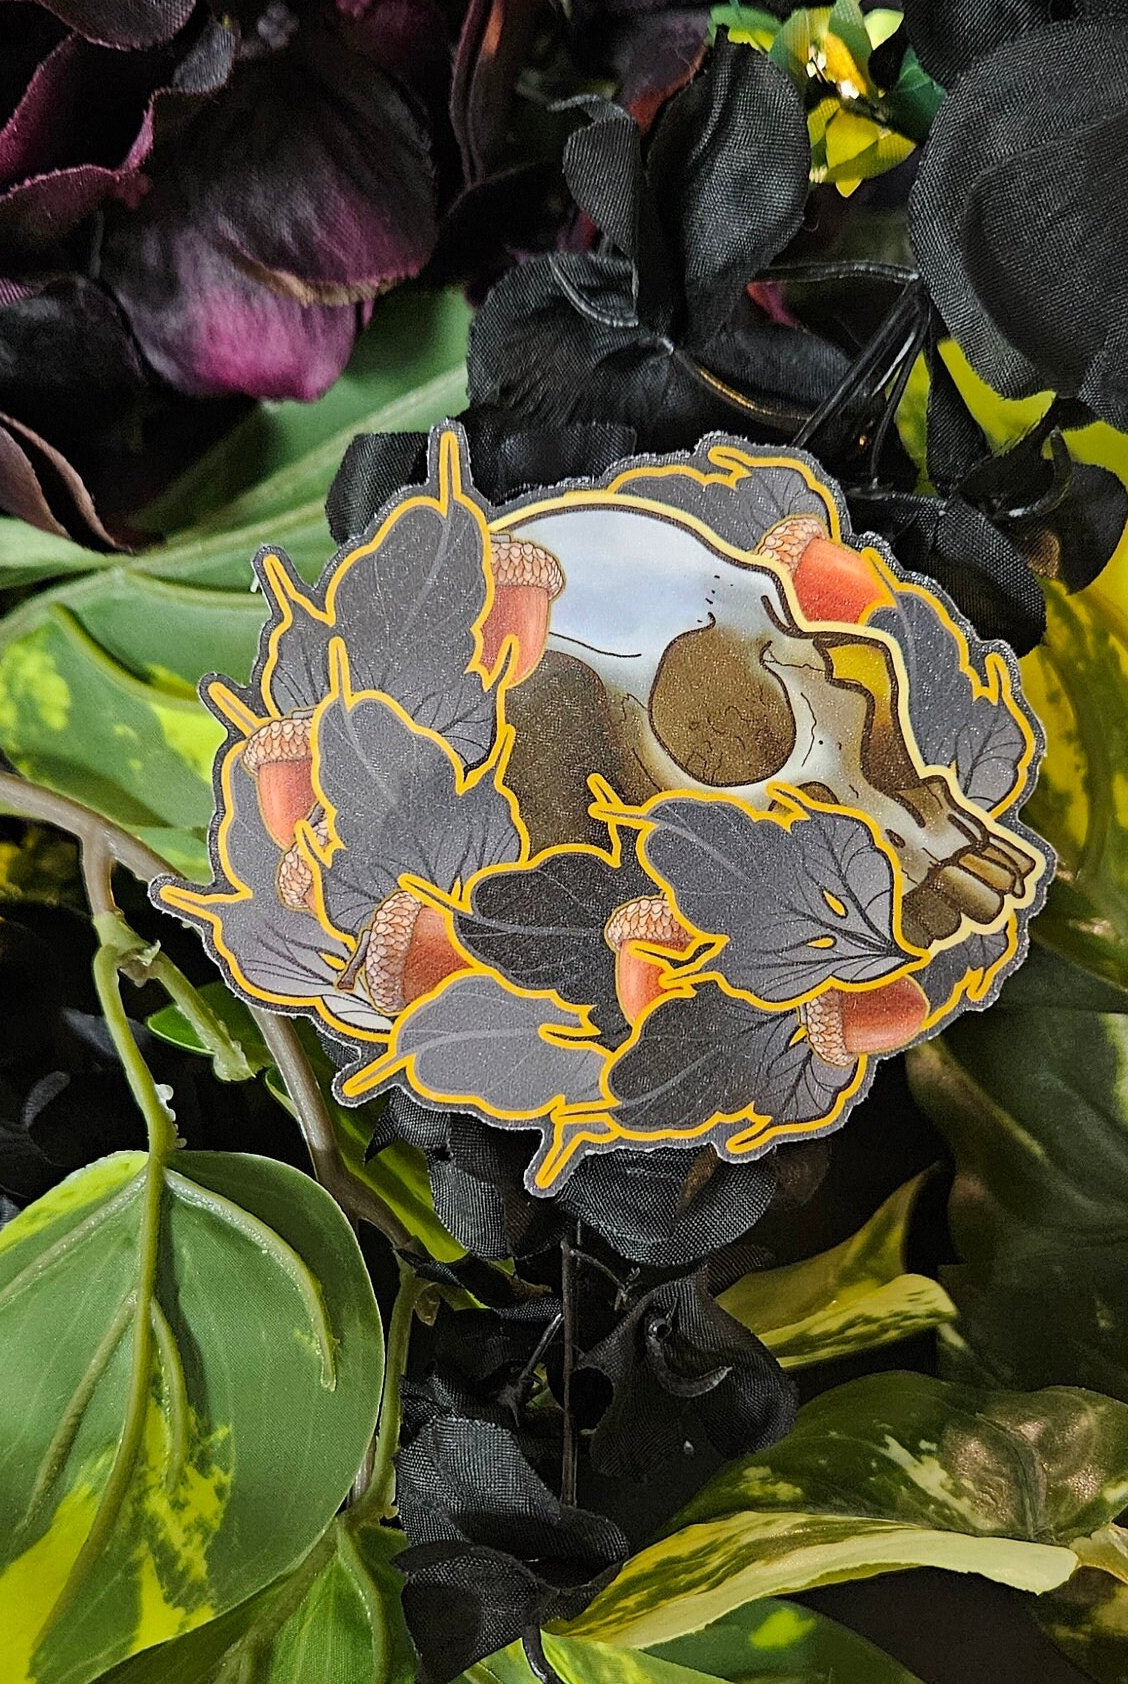 TEMPORARY TATTOO: Acorn Skull with Leaves